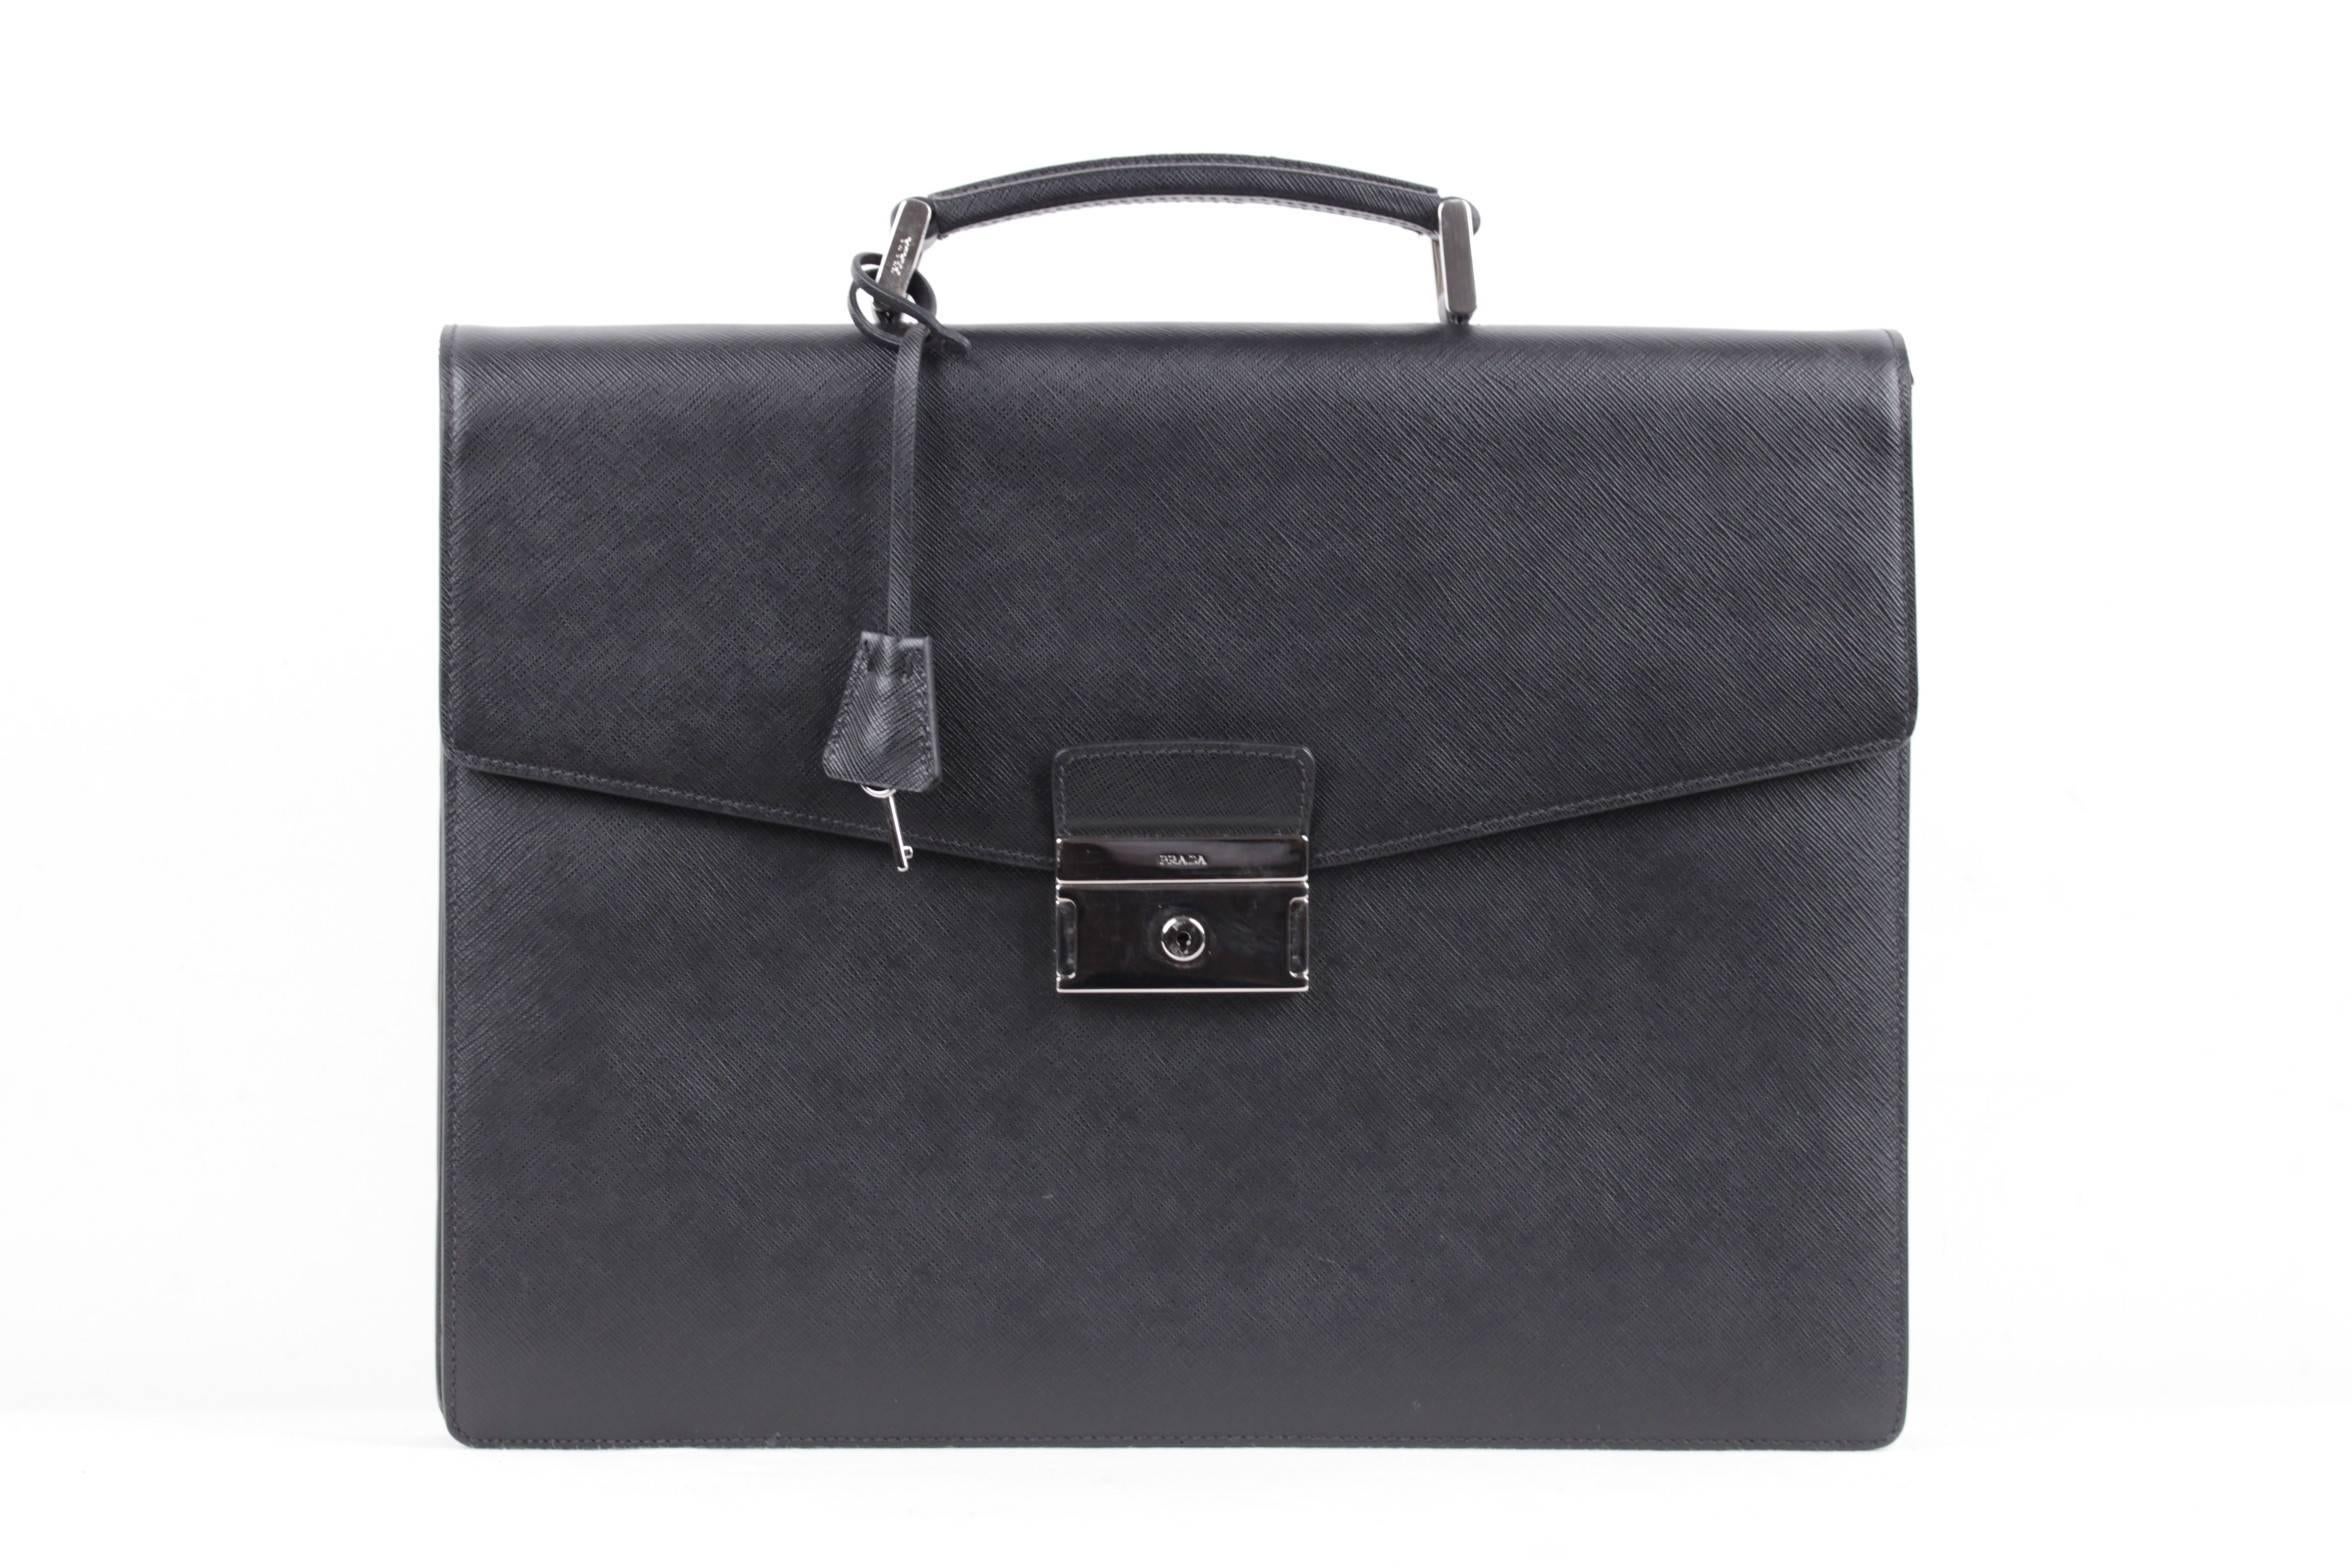 prada saffiano leather briefcase